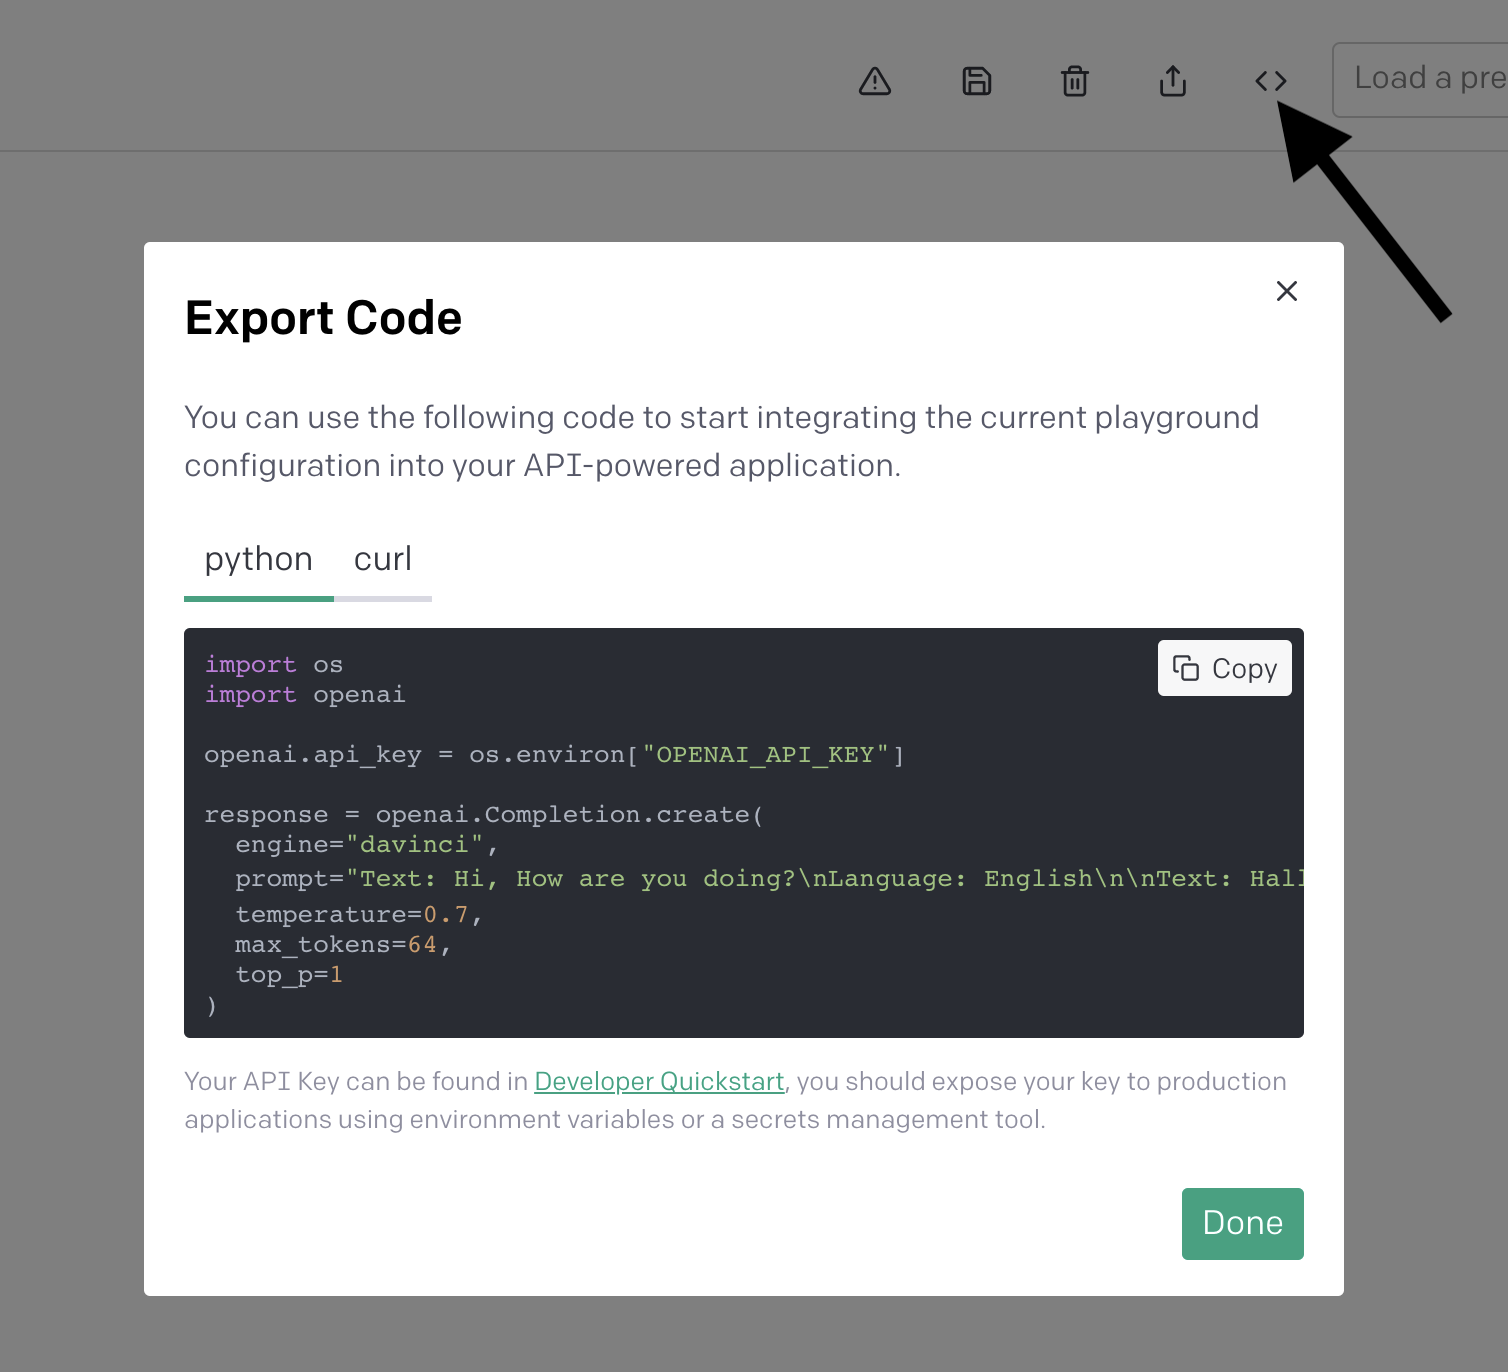 Export code to Python